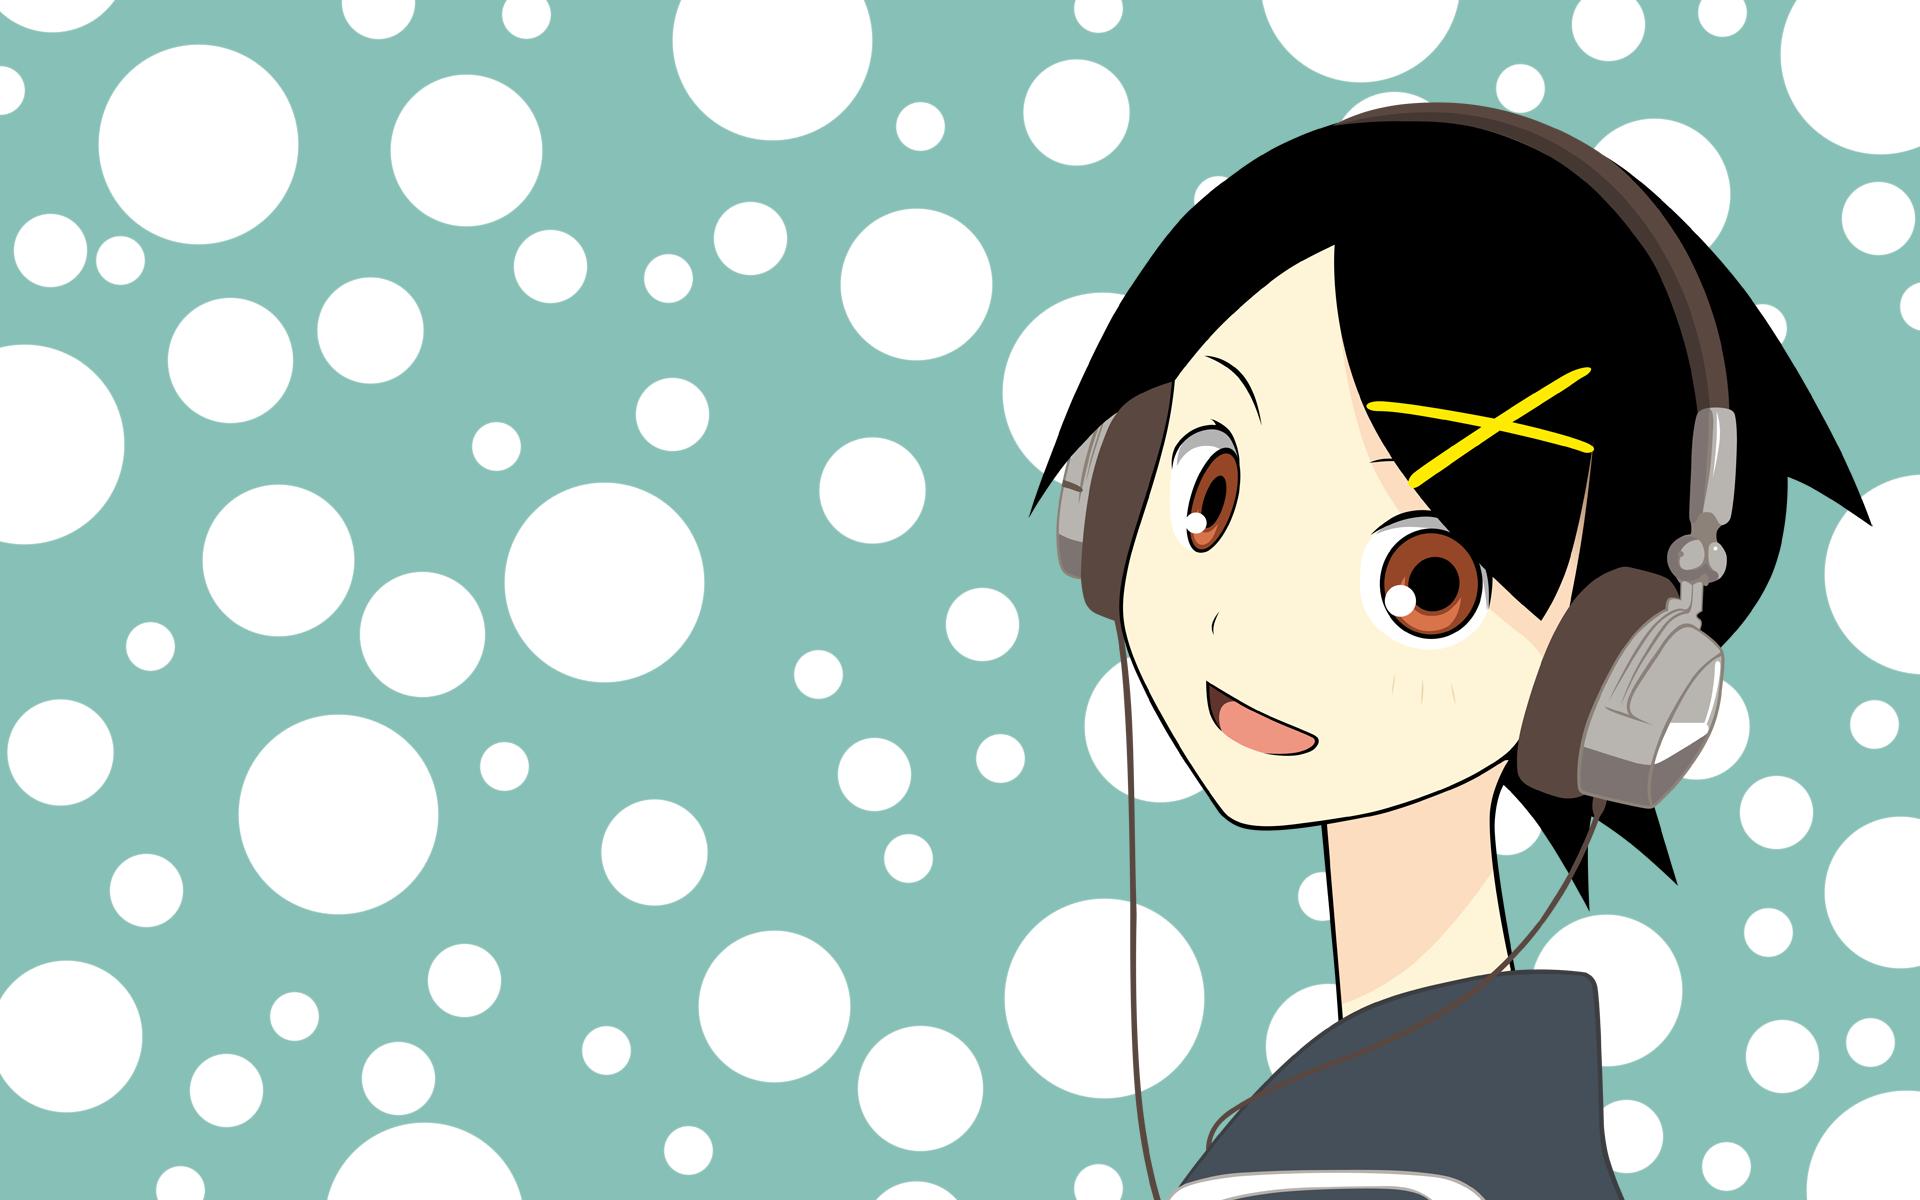 Kafuka Fuura wearing headphones.